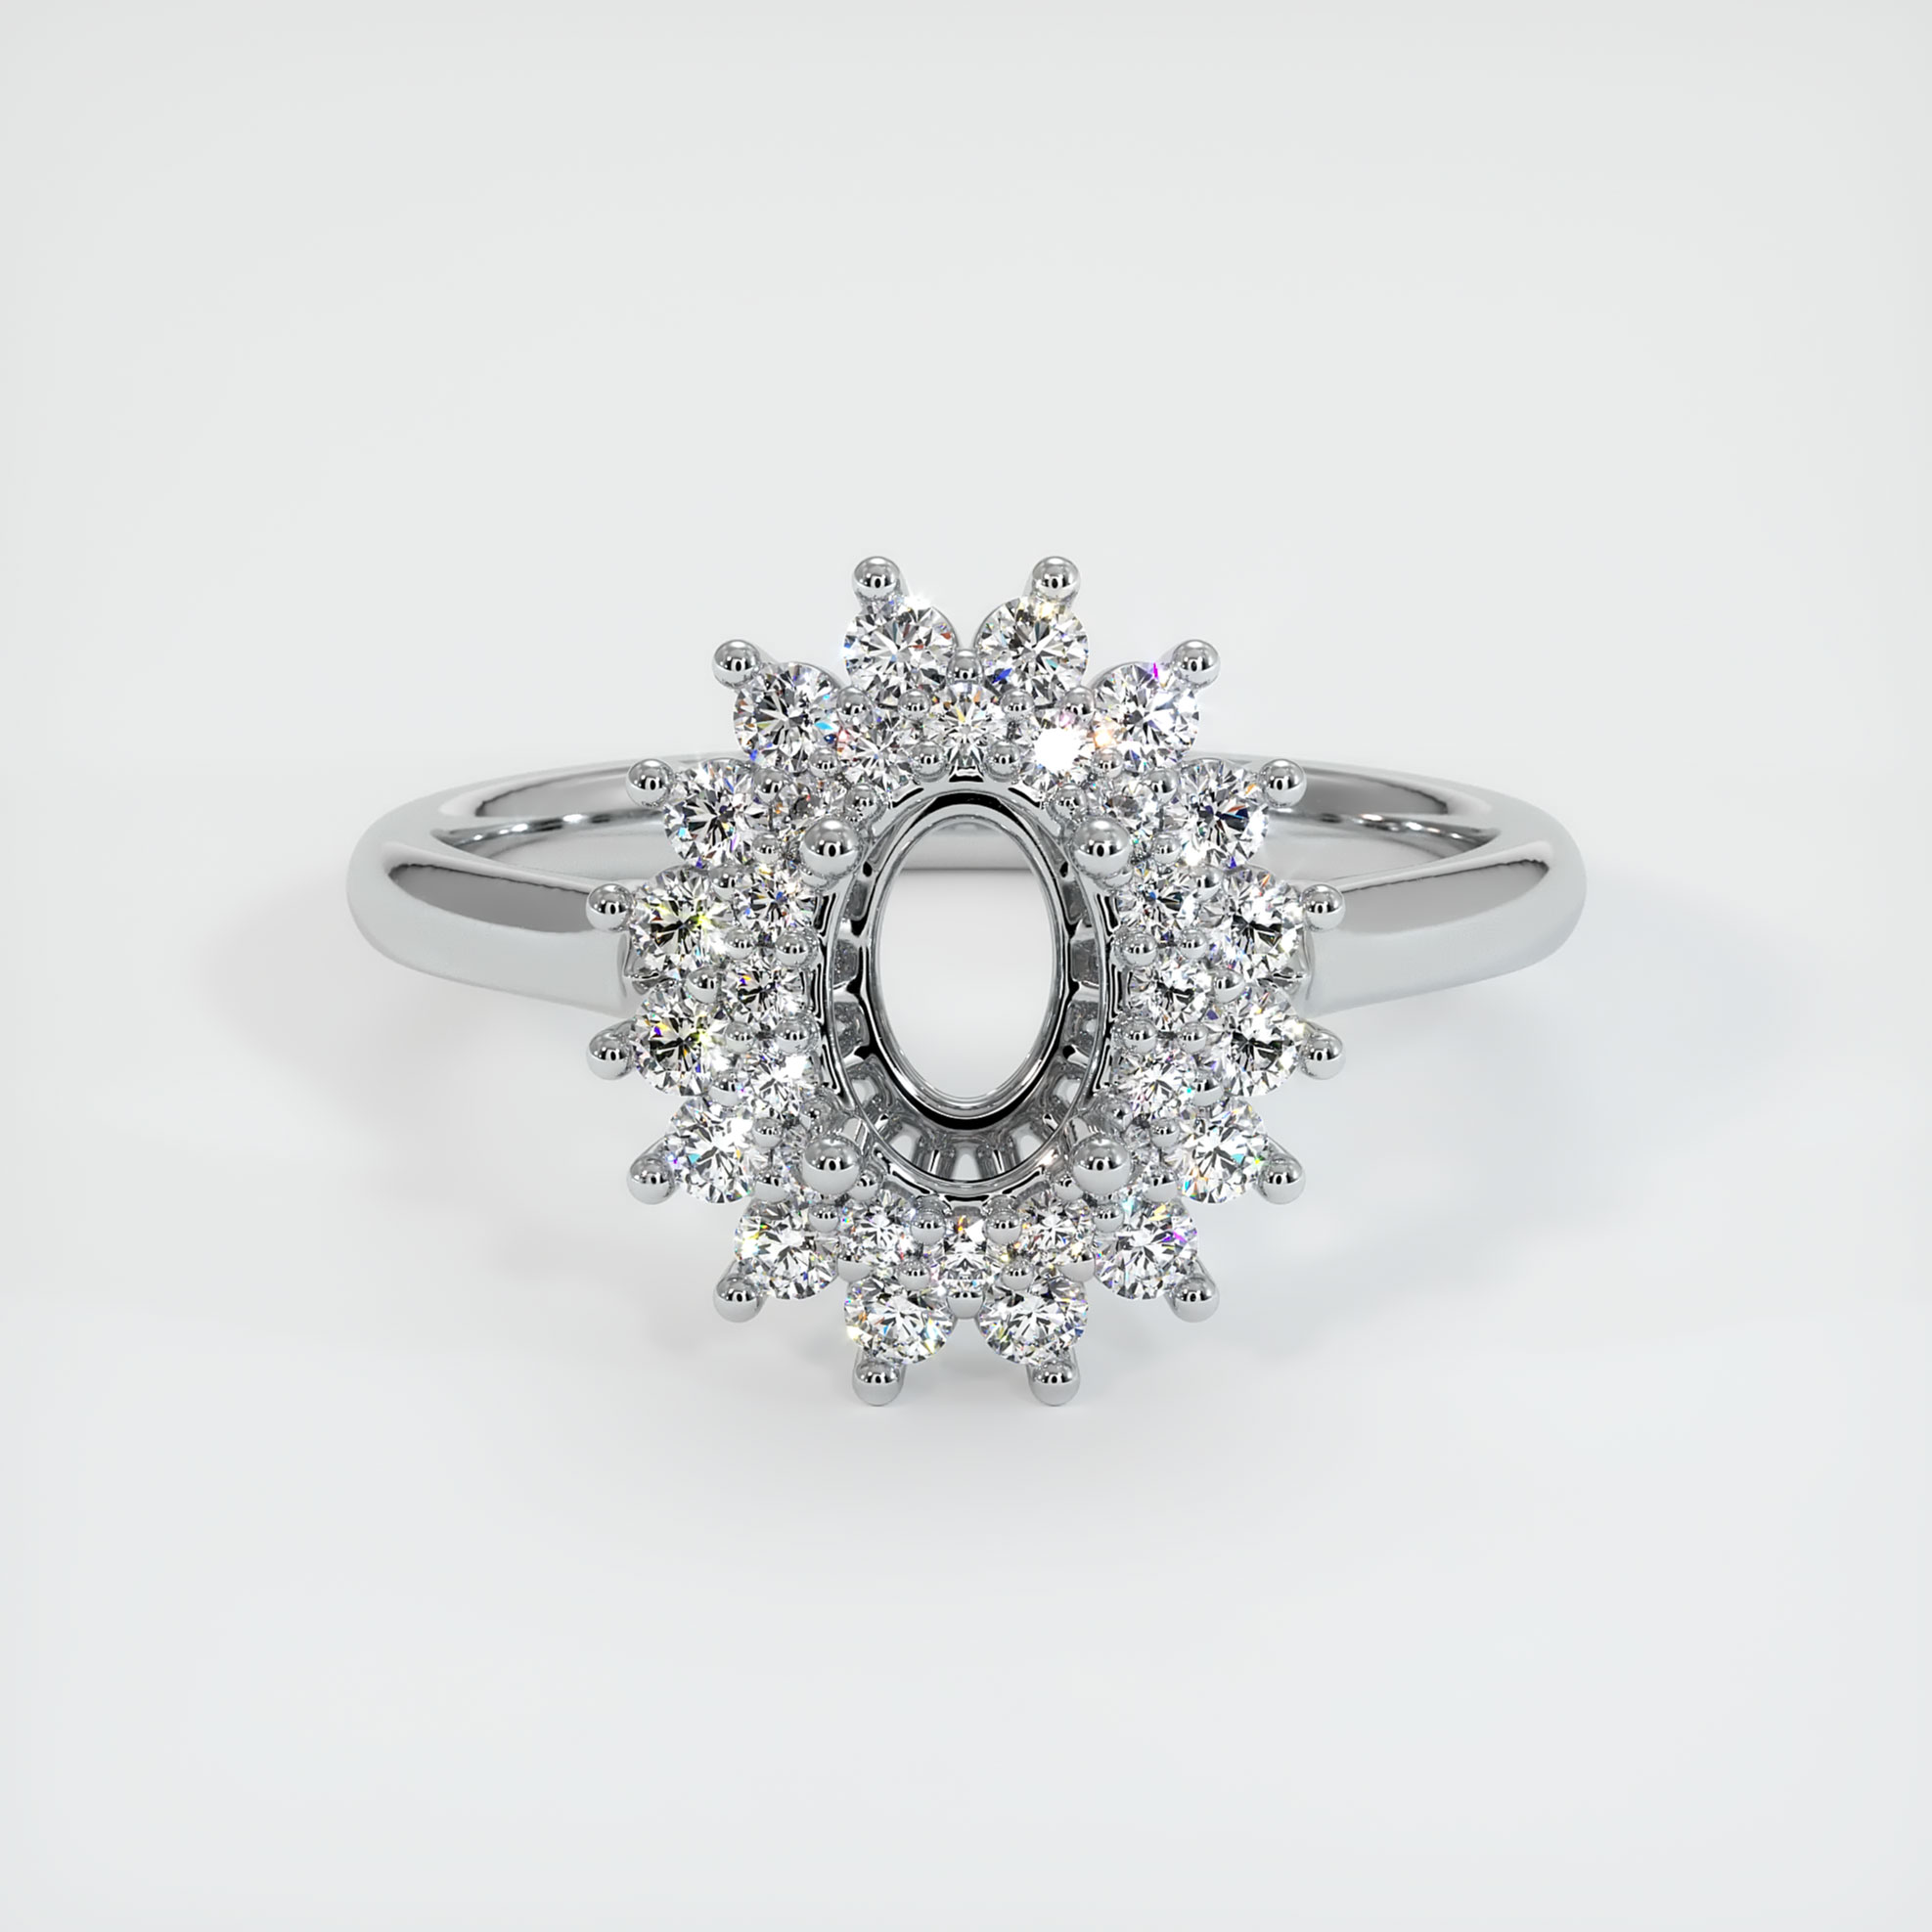 10k White Gold Pave.2ct Diamond Engagement Wedding Semi Mount Ring 12x9mm Oval 